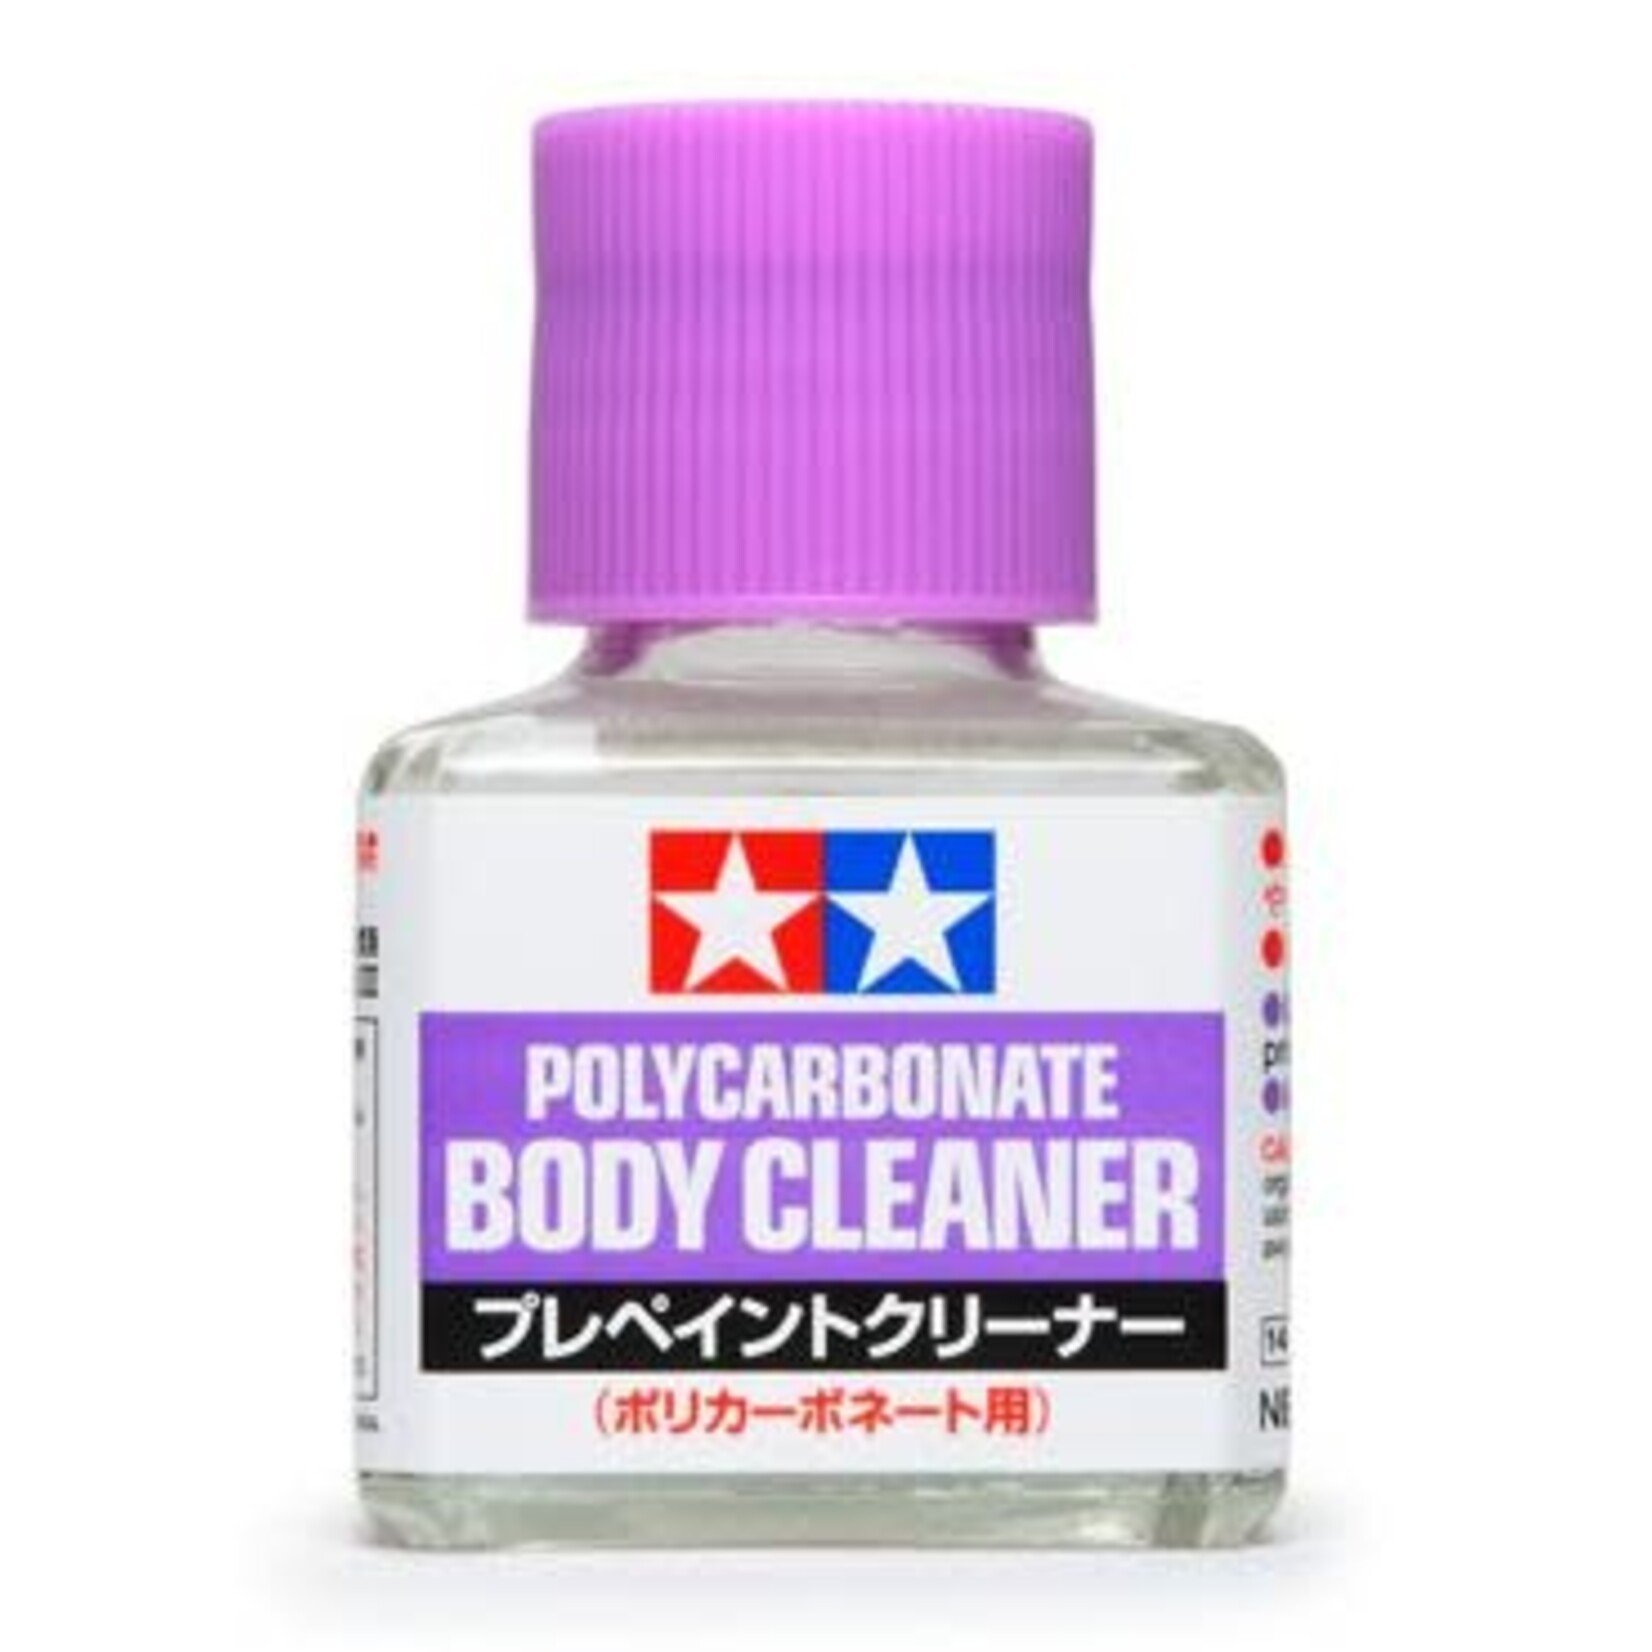 Tamiya Polycarbonate Body Cleaner